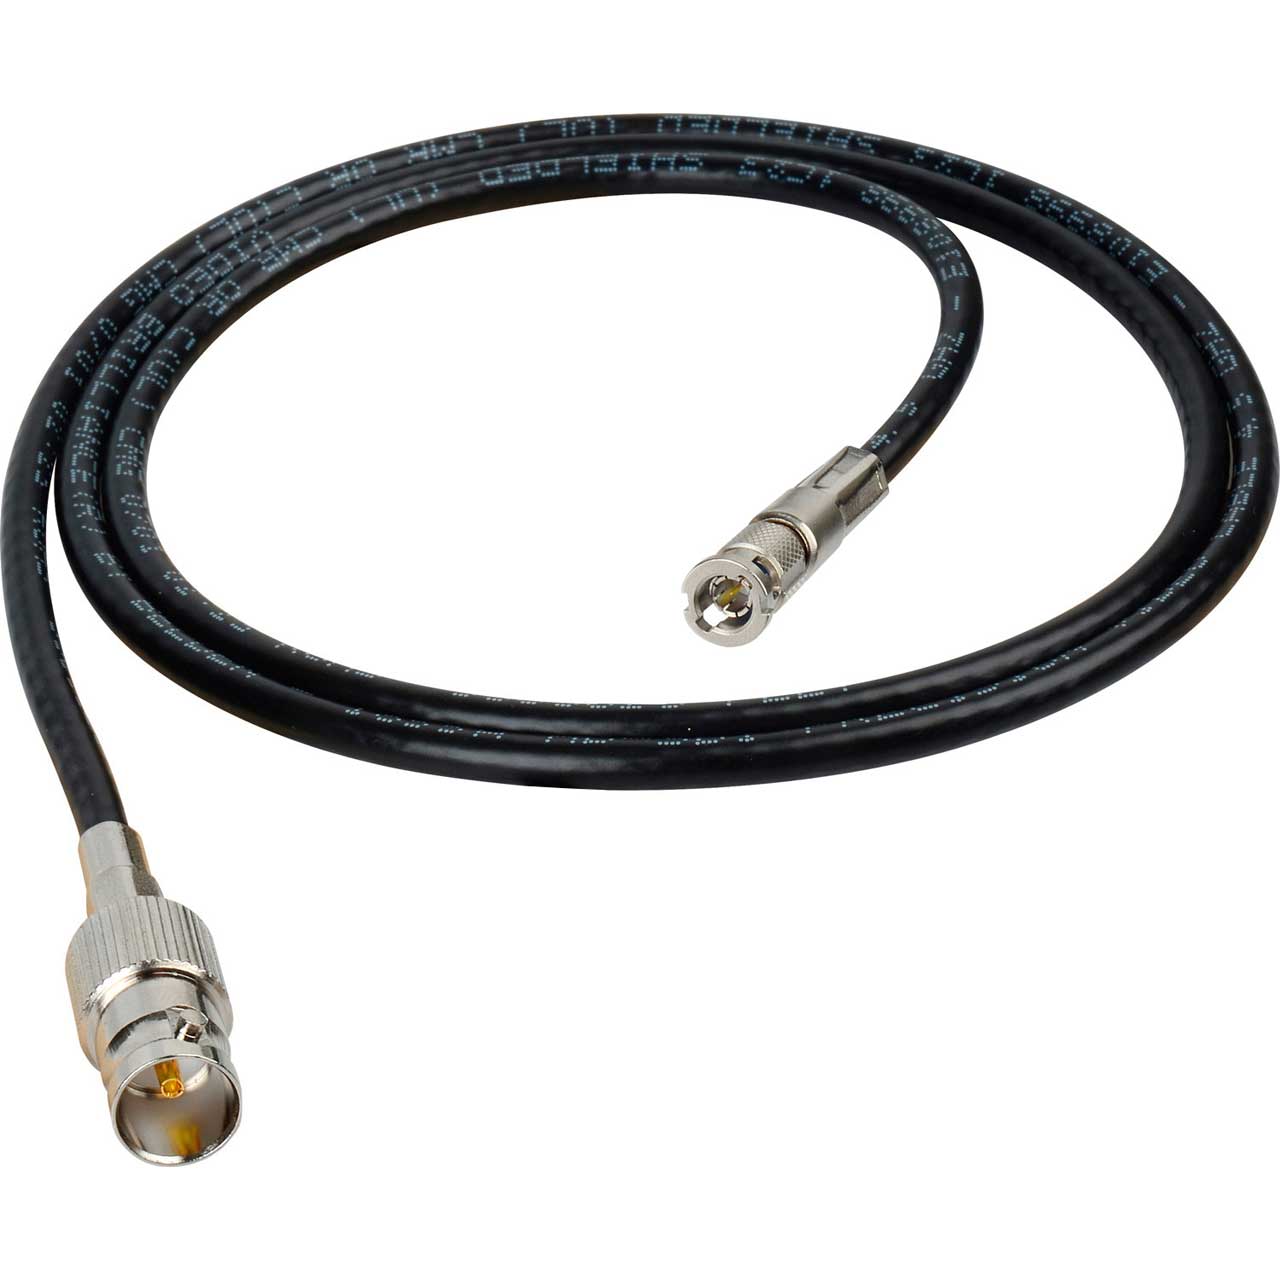 6" Belden 1855A HD-SDI Mini RG59 Video Cable BNC Male to Male Blue. 